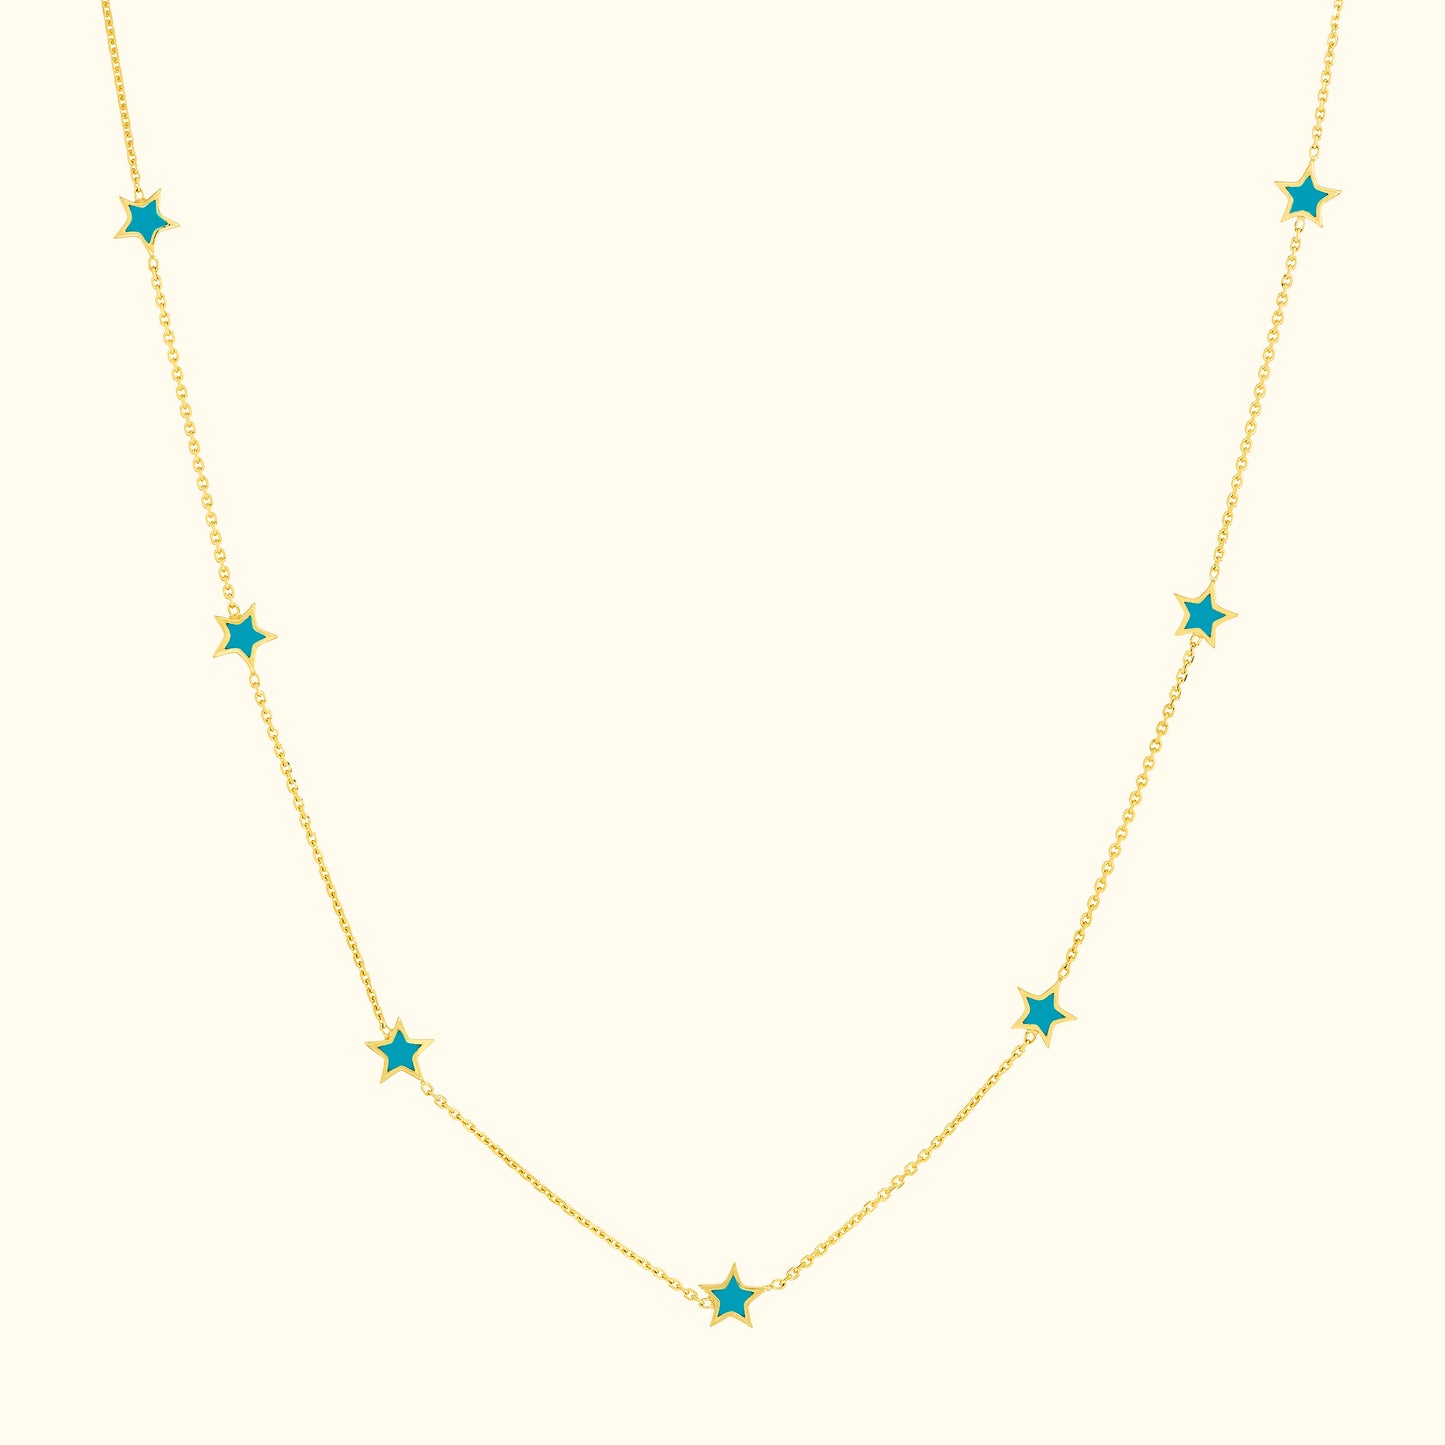 Teal Enamel Mini Star Necklace